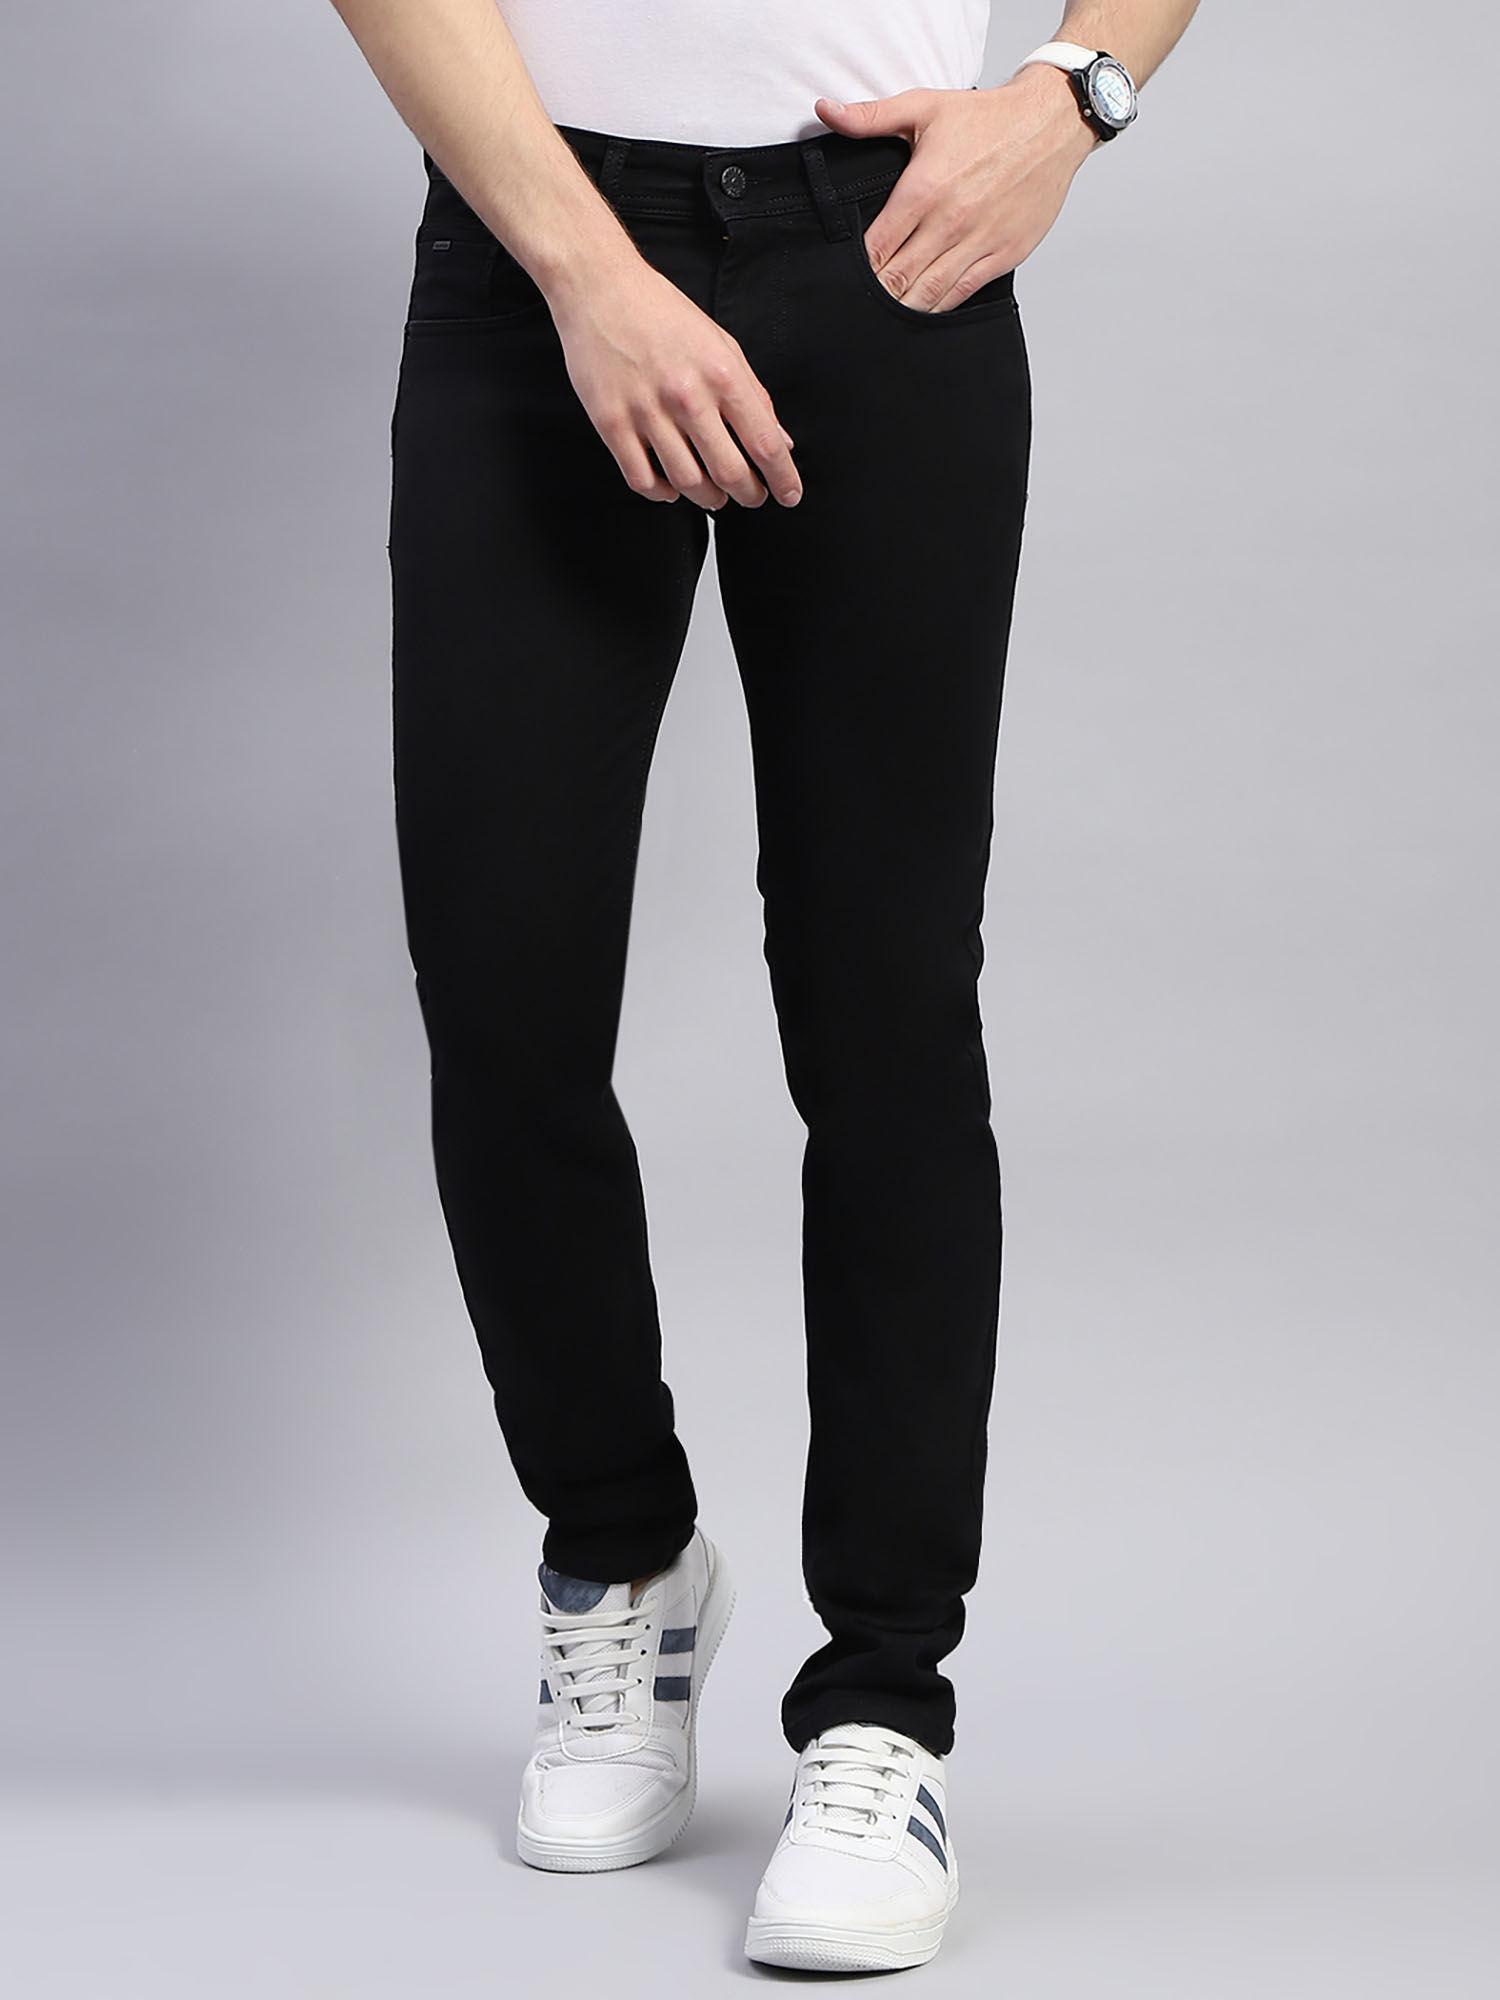 mens-solid-black-slim-fit-casual-jeans